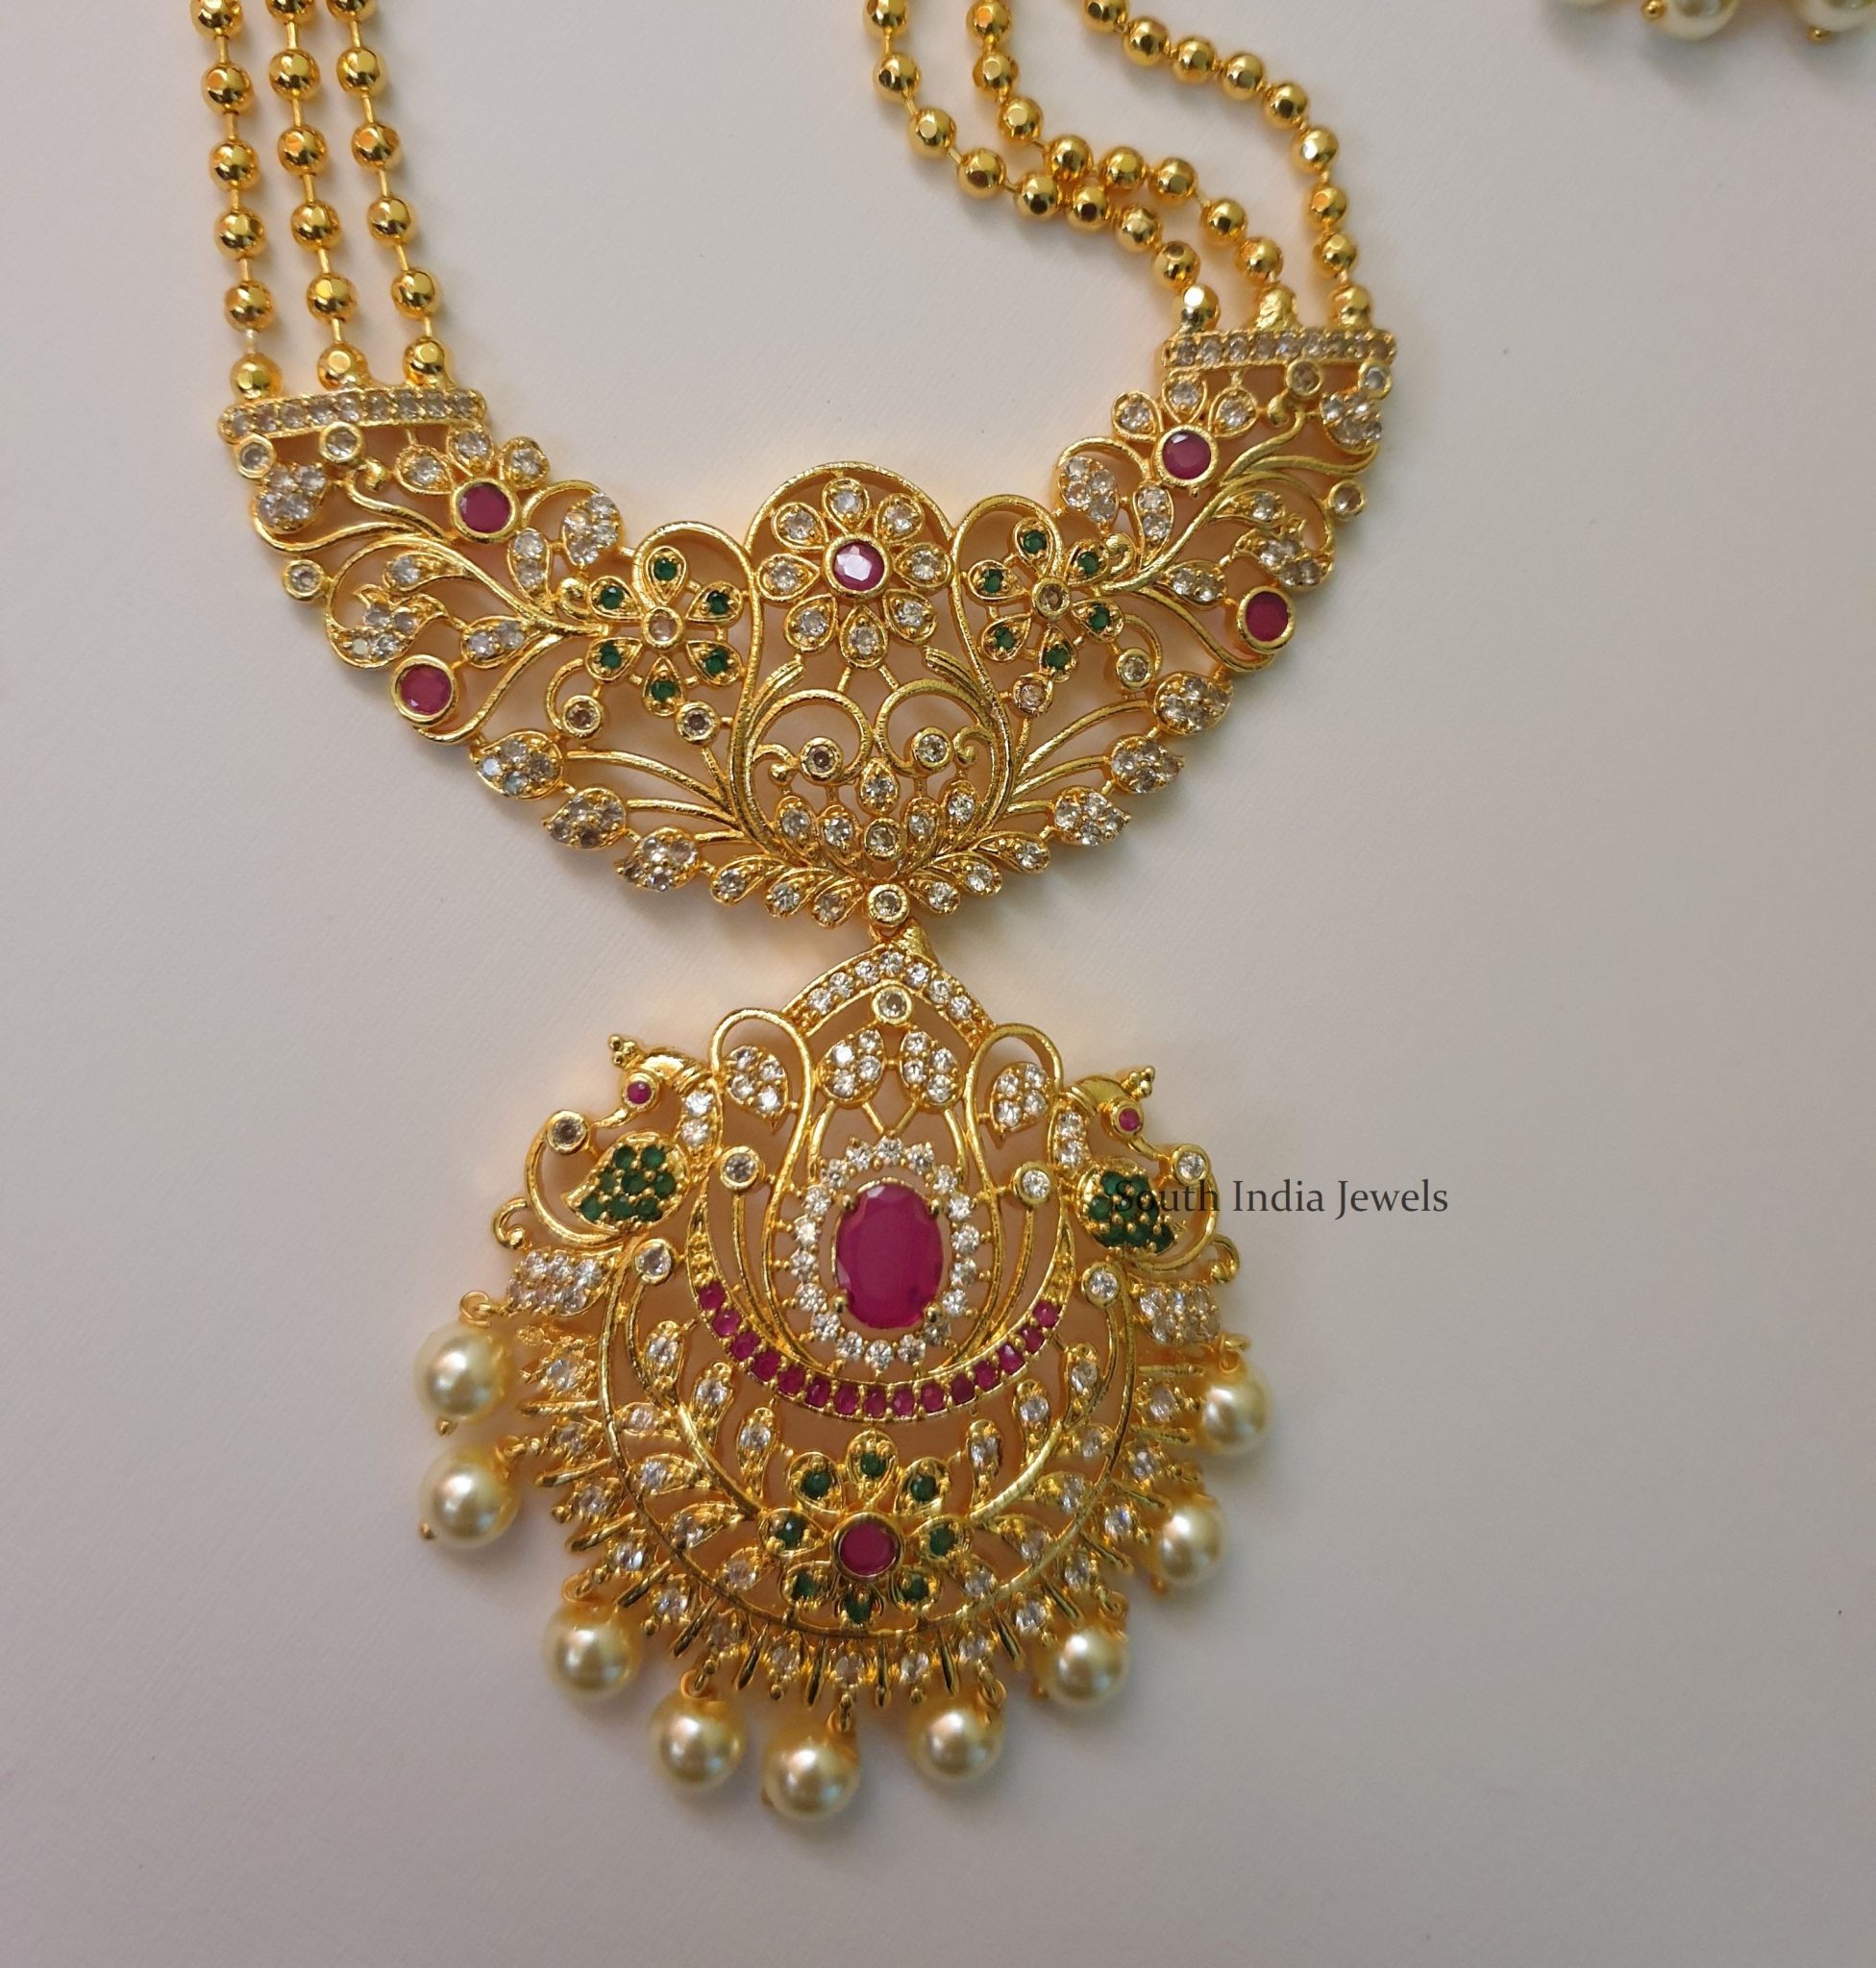 Gorgeous Multi Stone Haram - South India Jewels